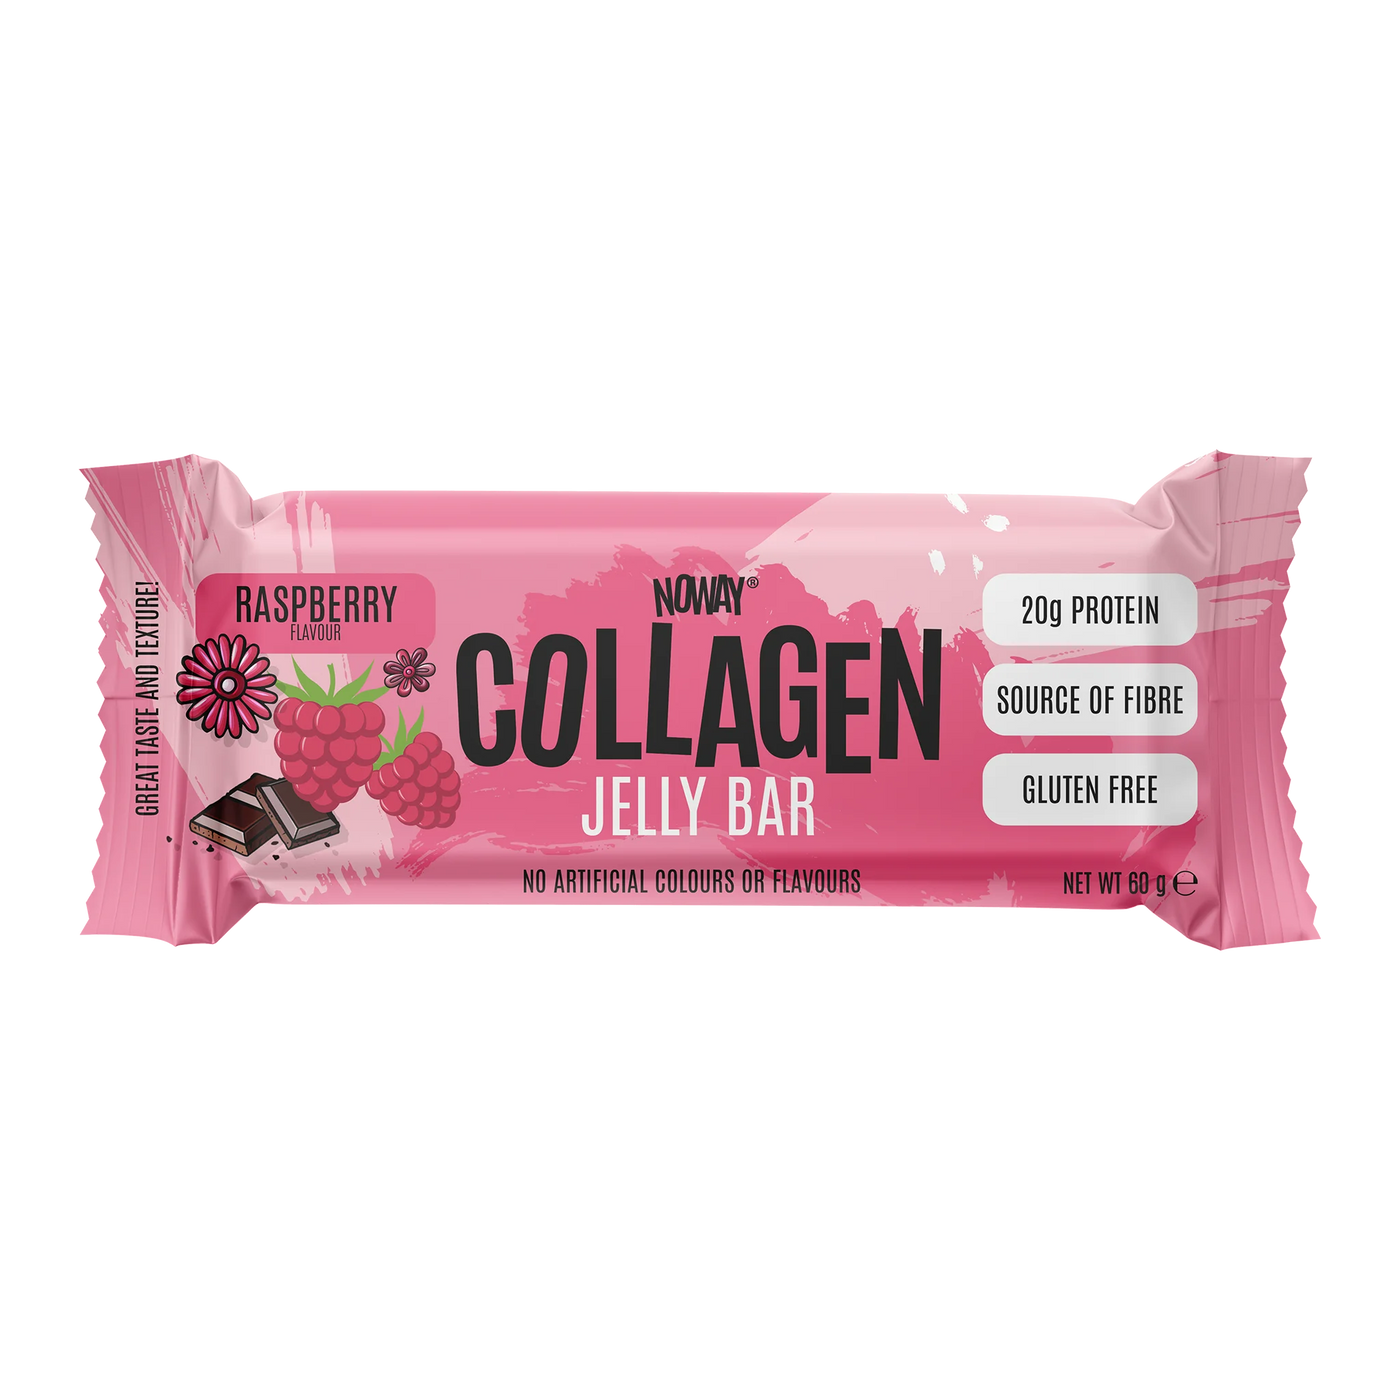 NOWAY Collagen Jelly Bar - Raspberry